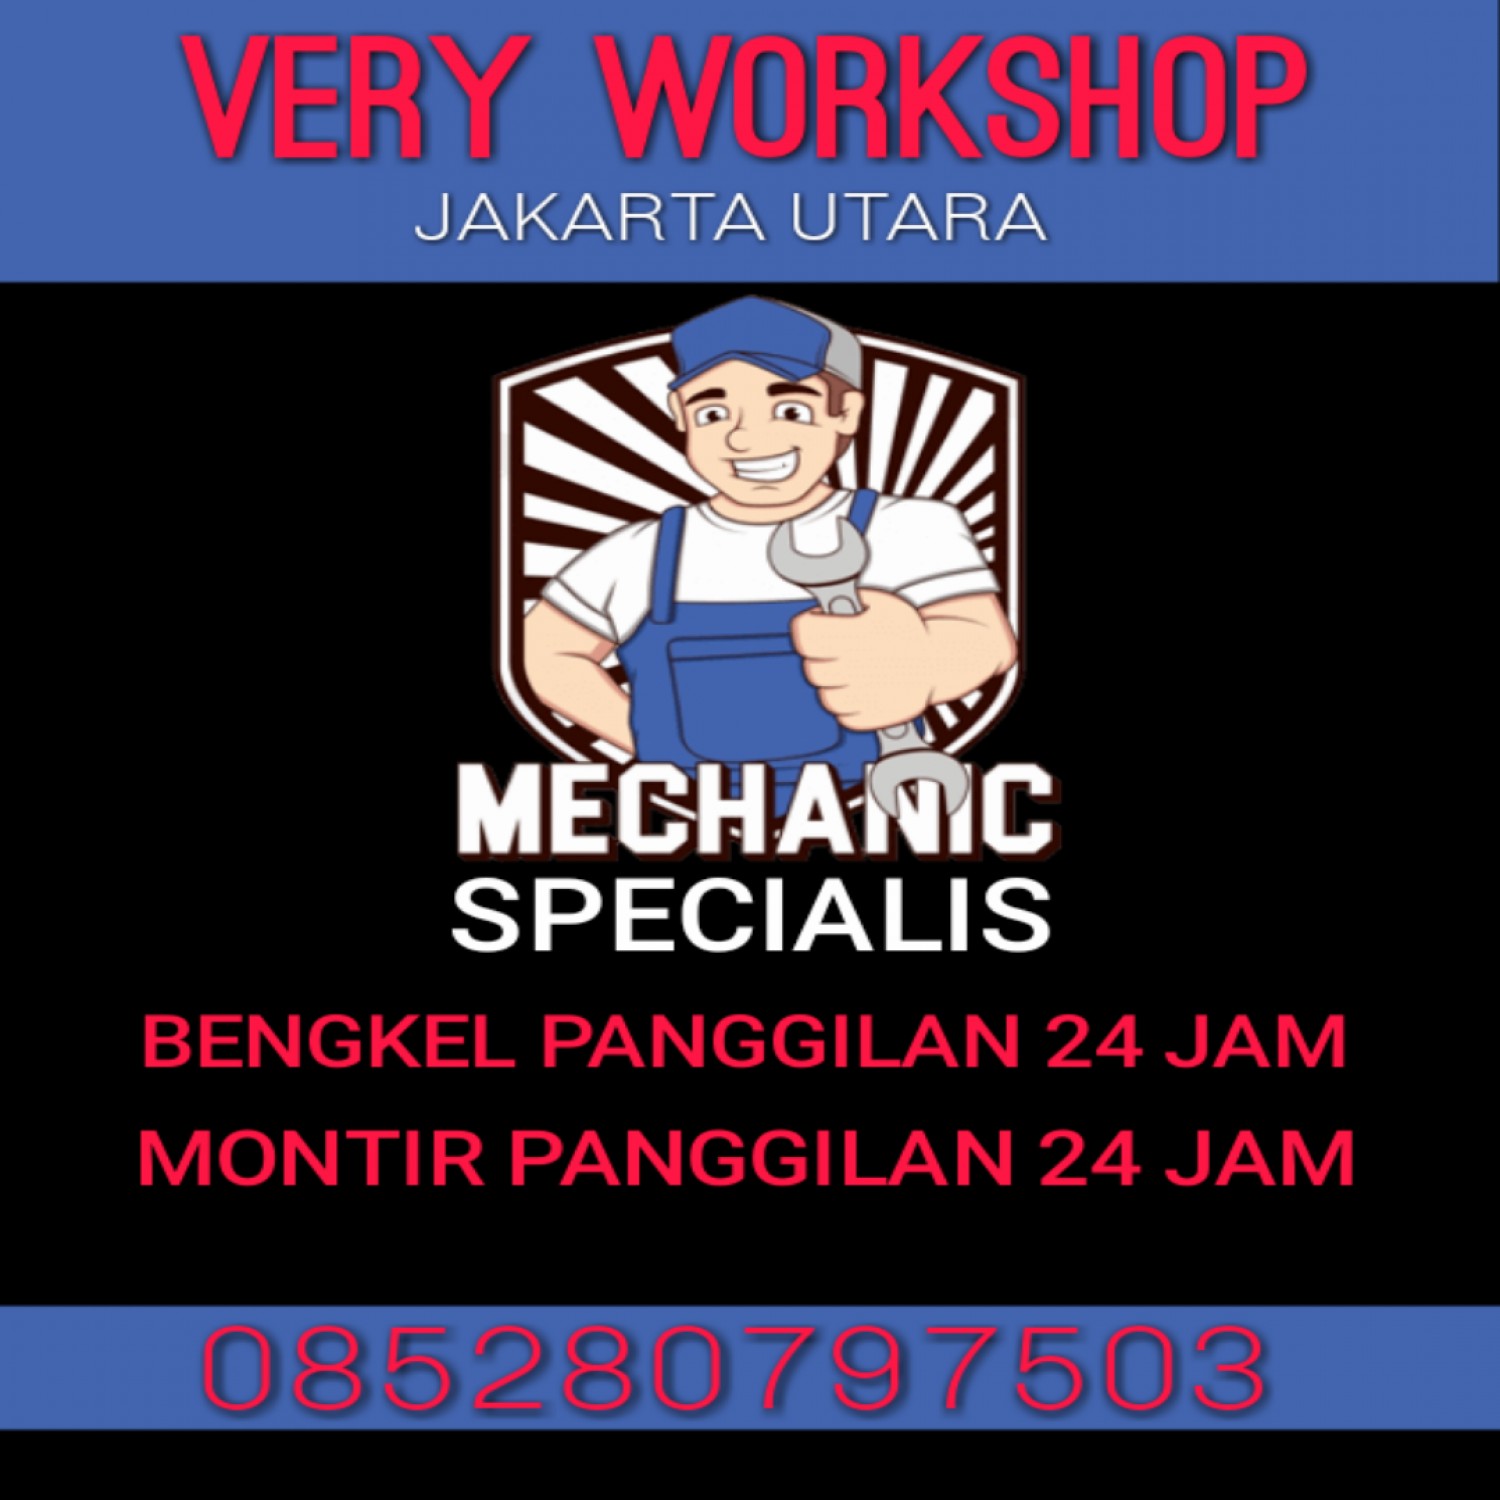 JASA SERVICE MOBIL PANGGILAN JAKARTA UTARA 0852-8079-7503